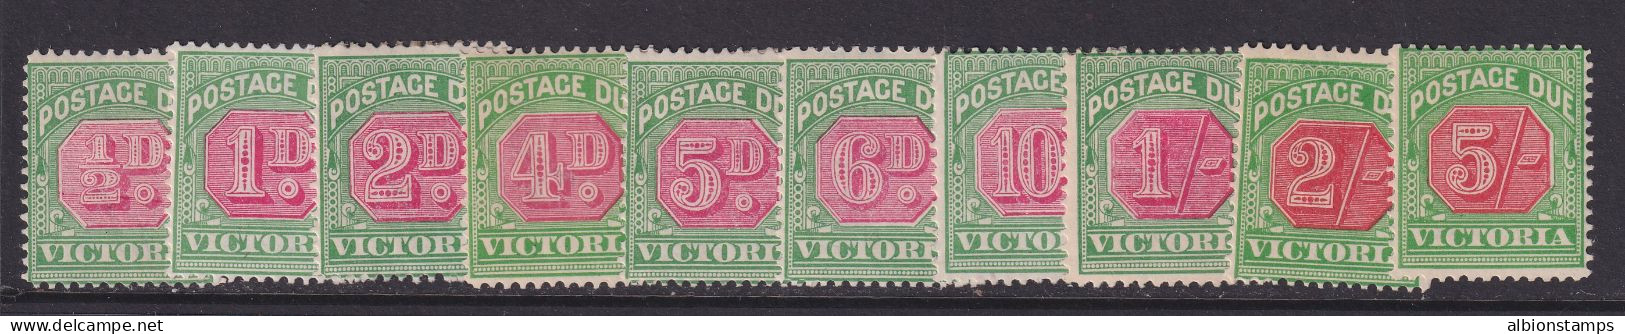 Victoria (Australian States), Scott J15-J24 (SG D11-D20), MLH/HR - Mint Stamps